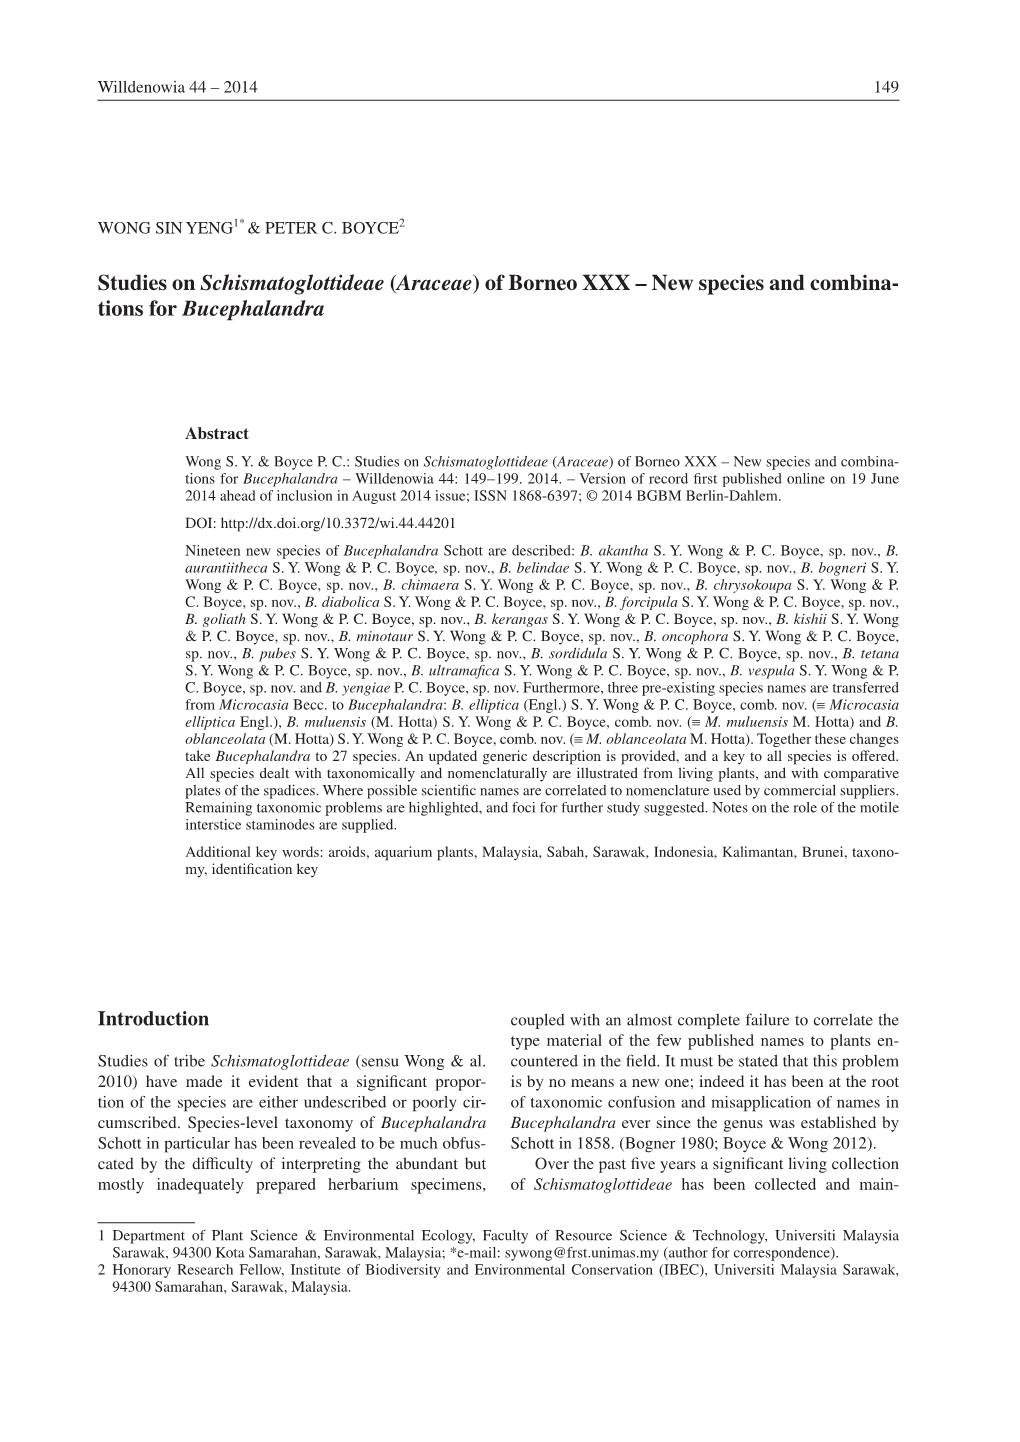 Of Borneo XXX – New Species and Combina- Tions for Bucephalandra